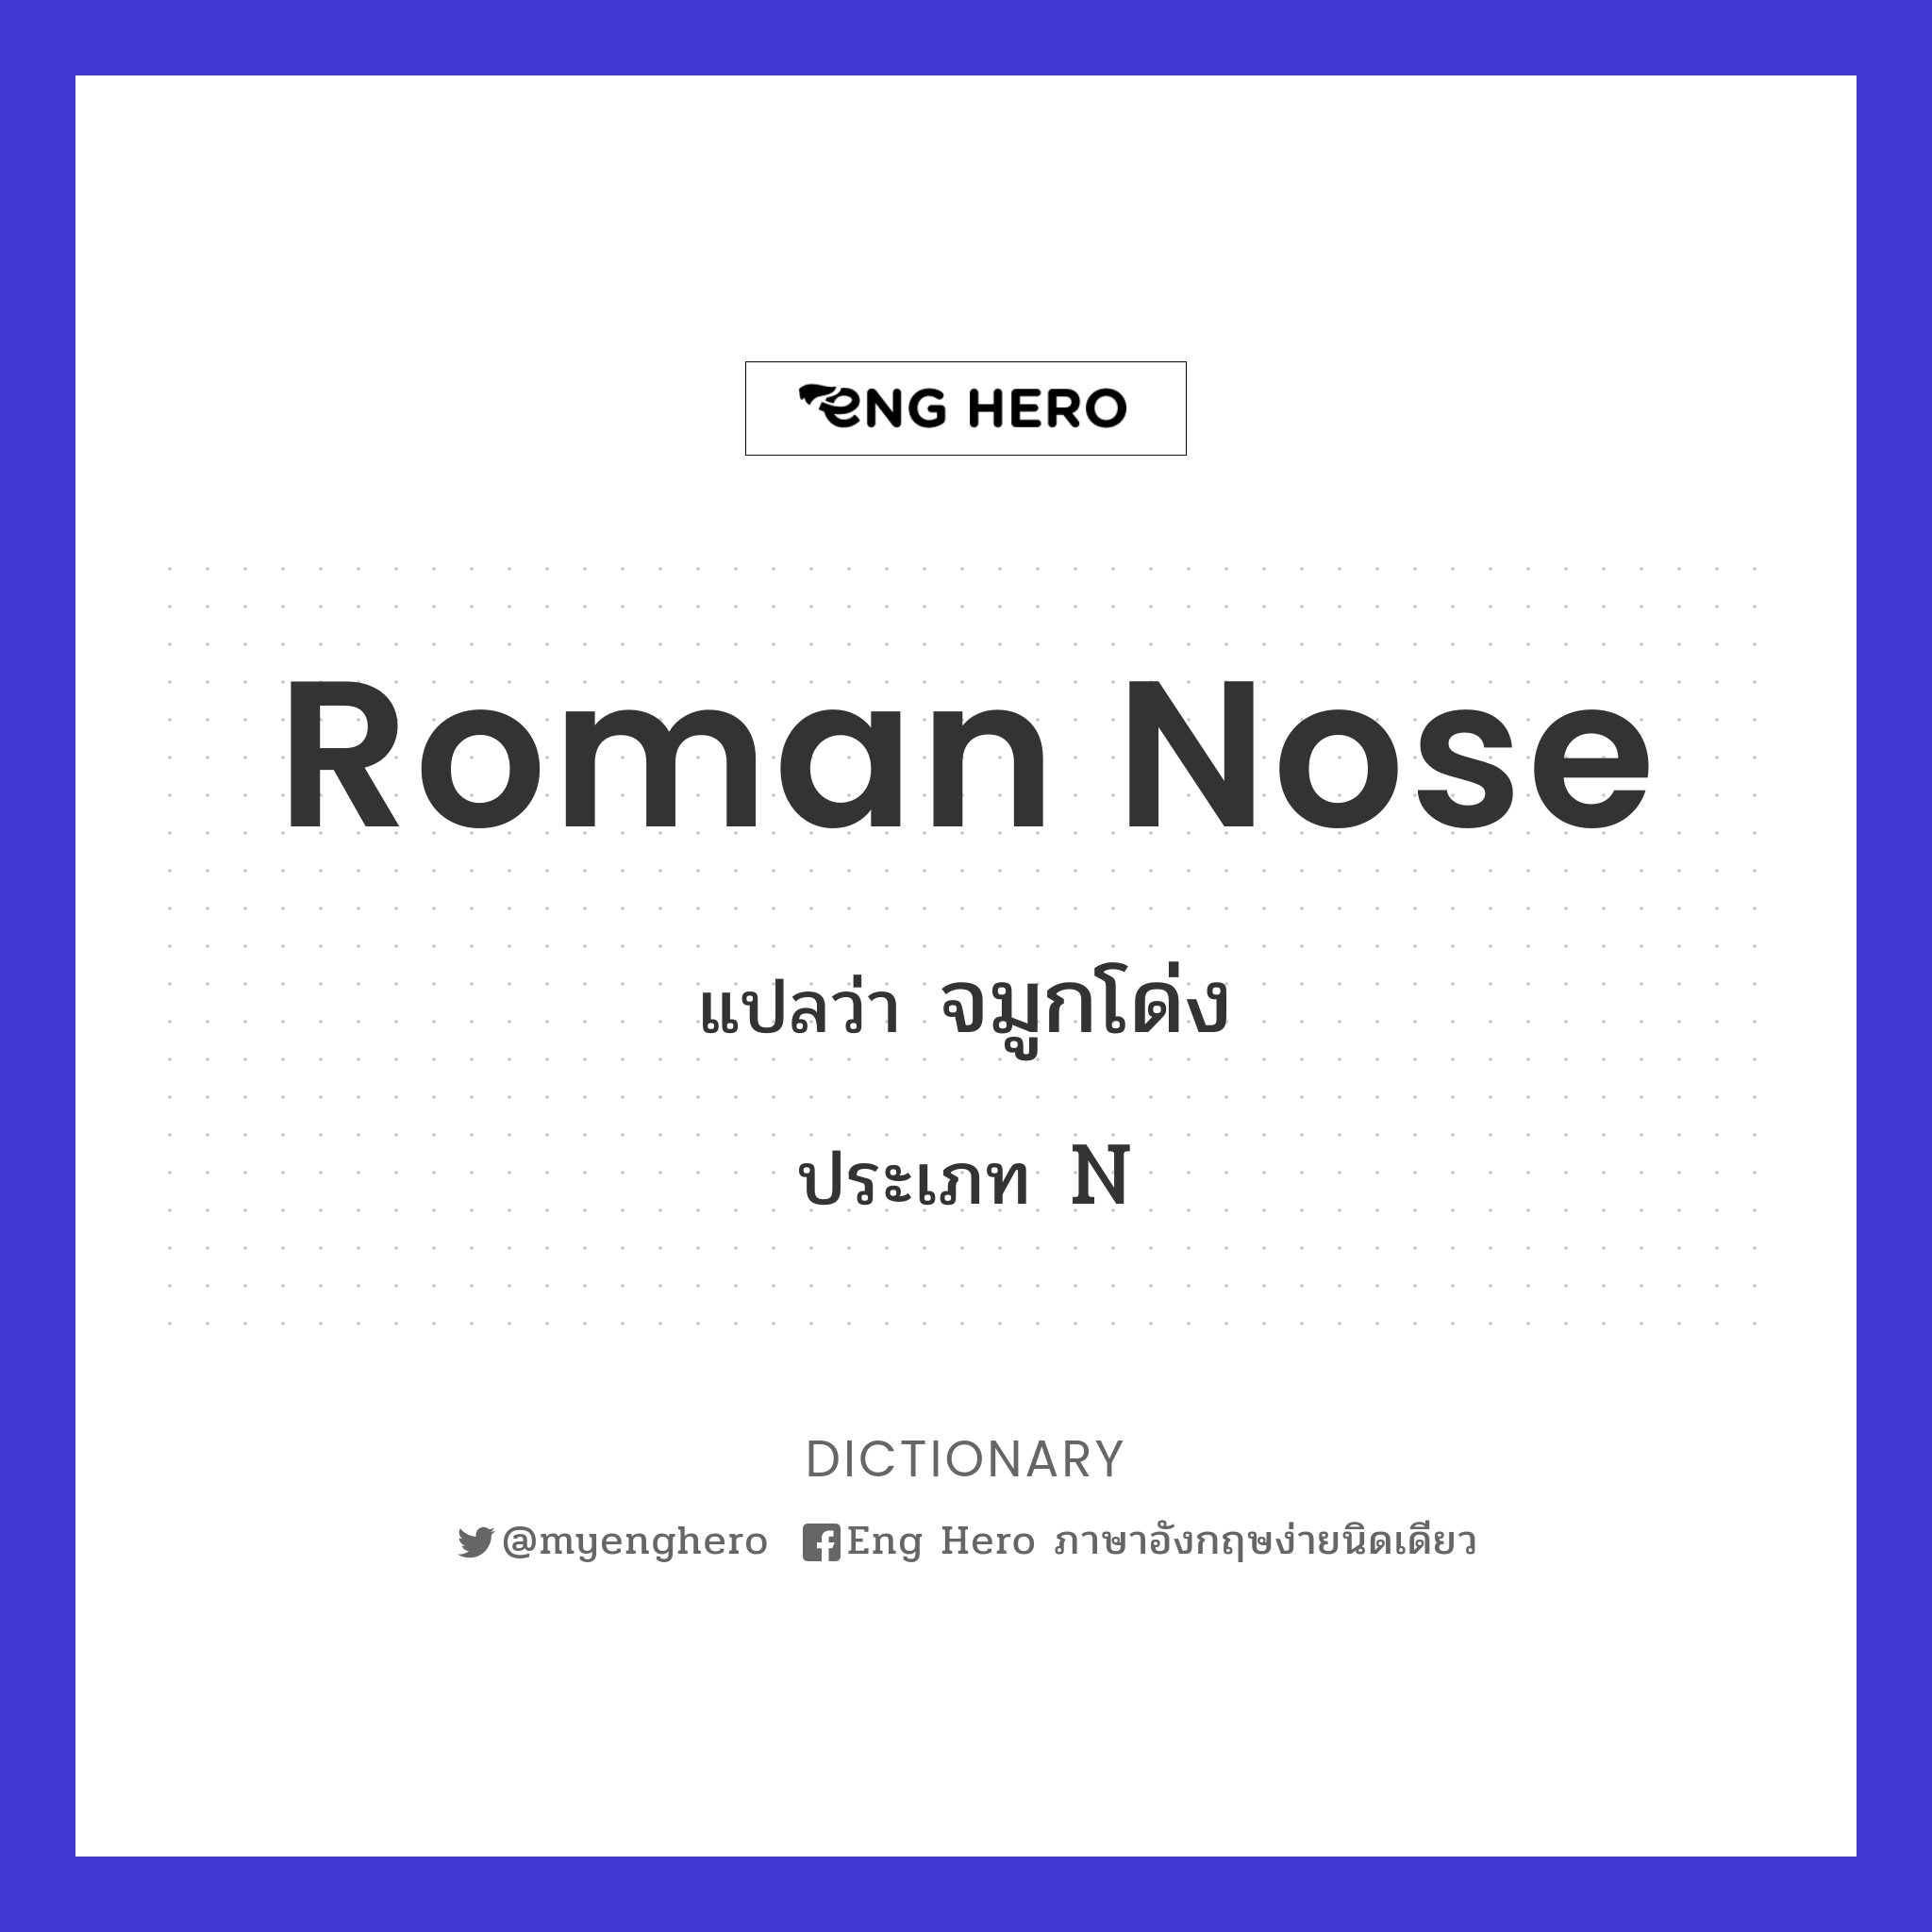 Roman nose